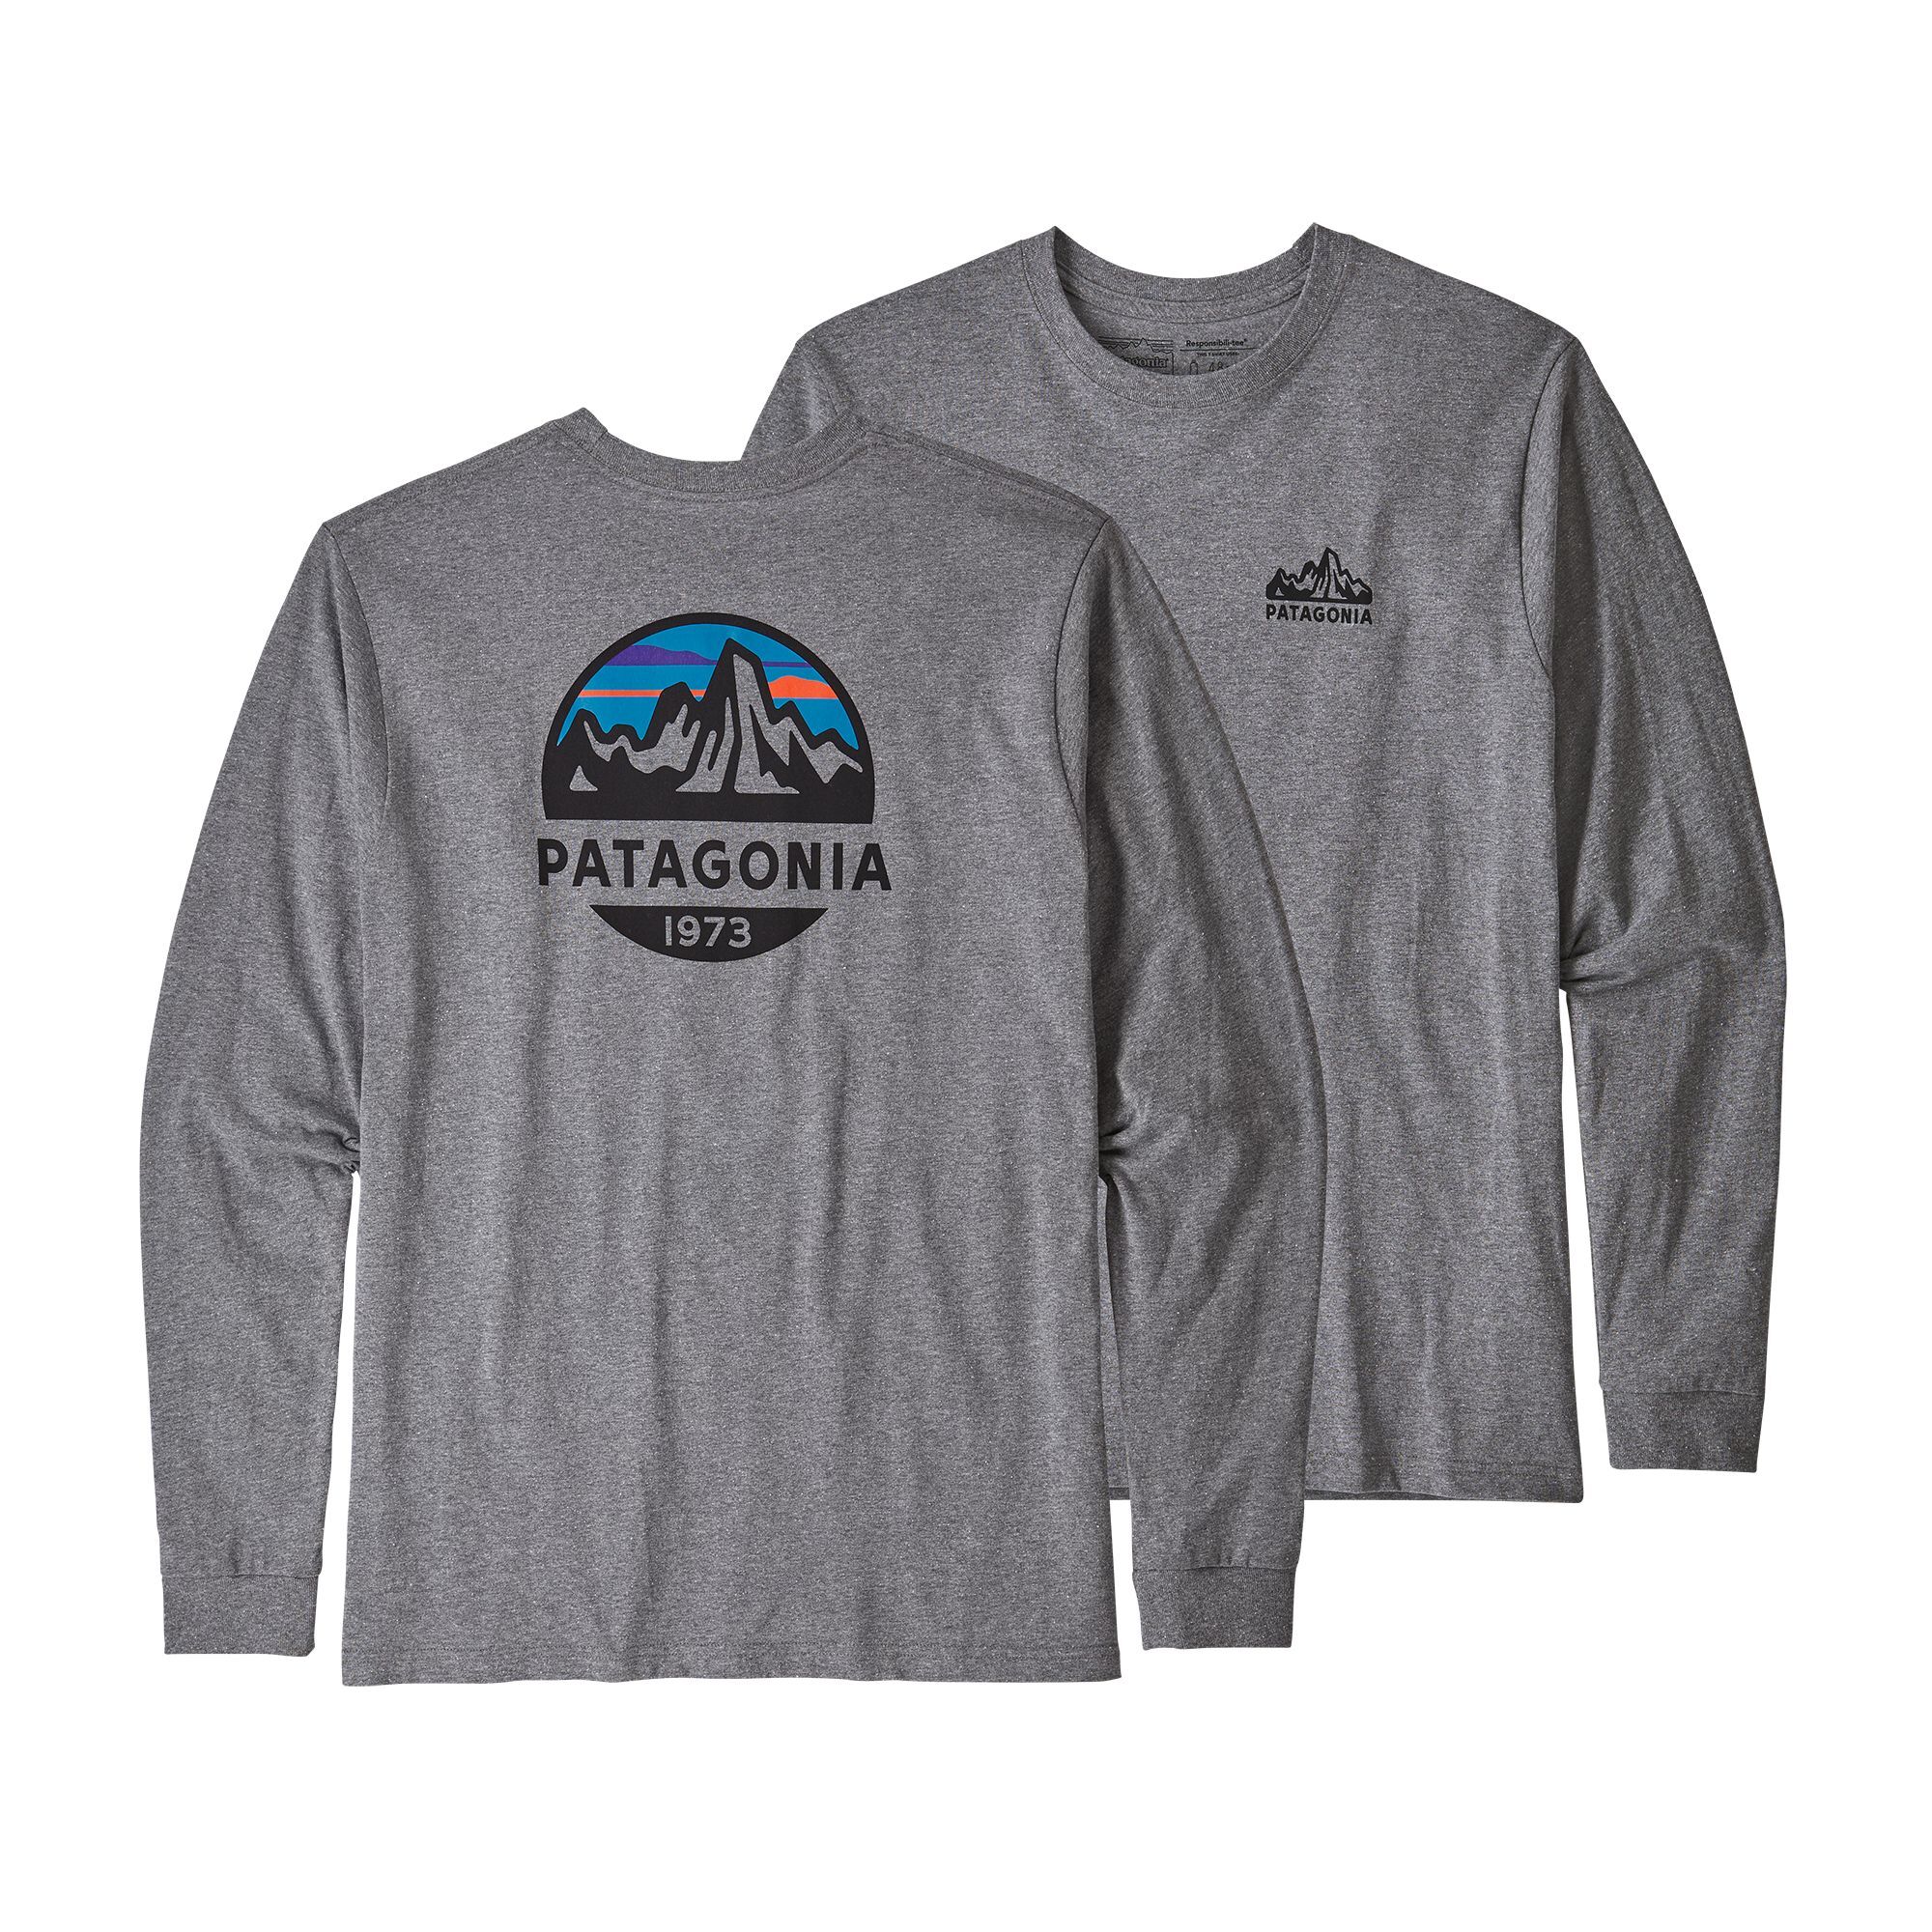 Patagonia L/S Fitz Roy Scope Responsibili-Tee - T-shirt - Men's